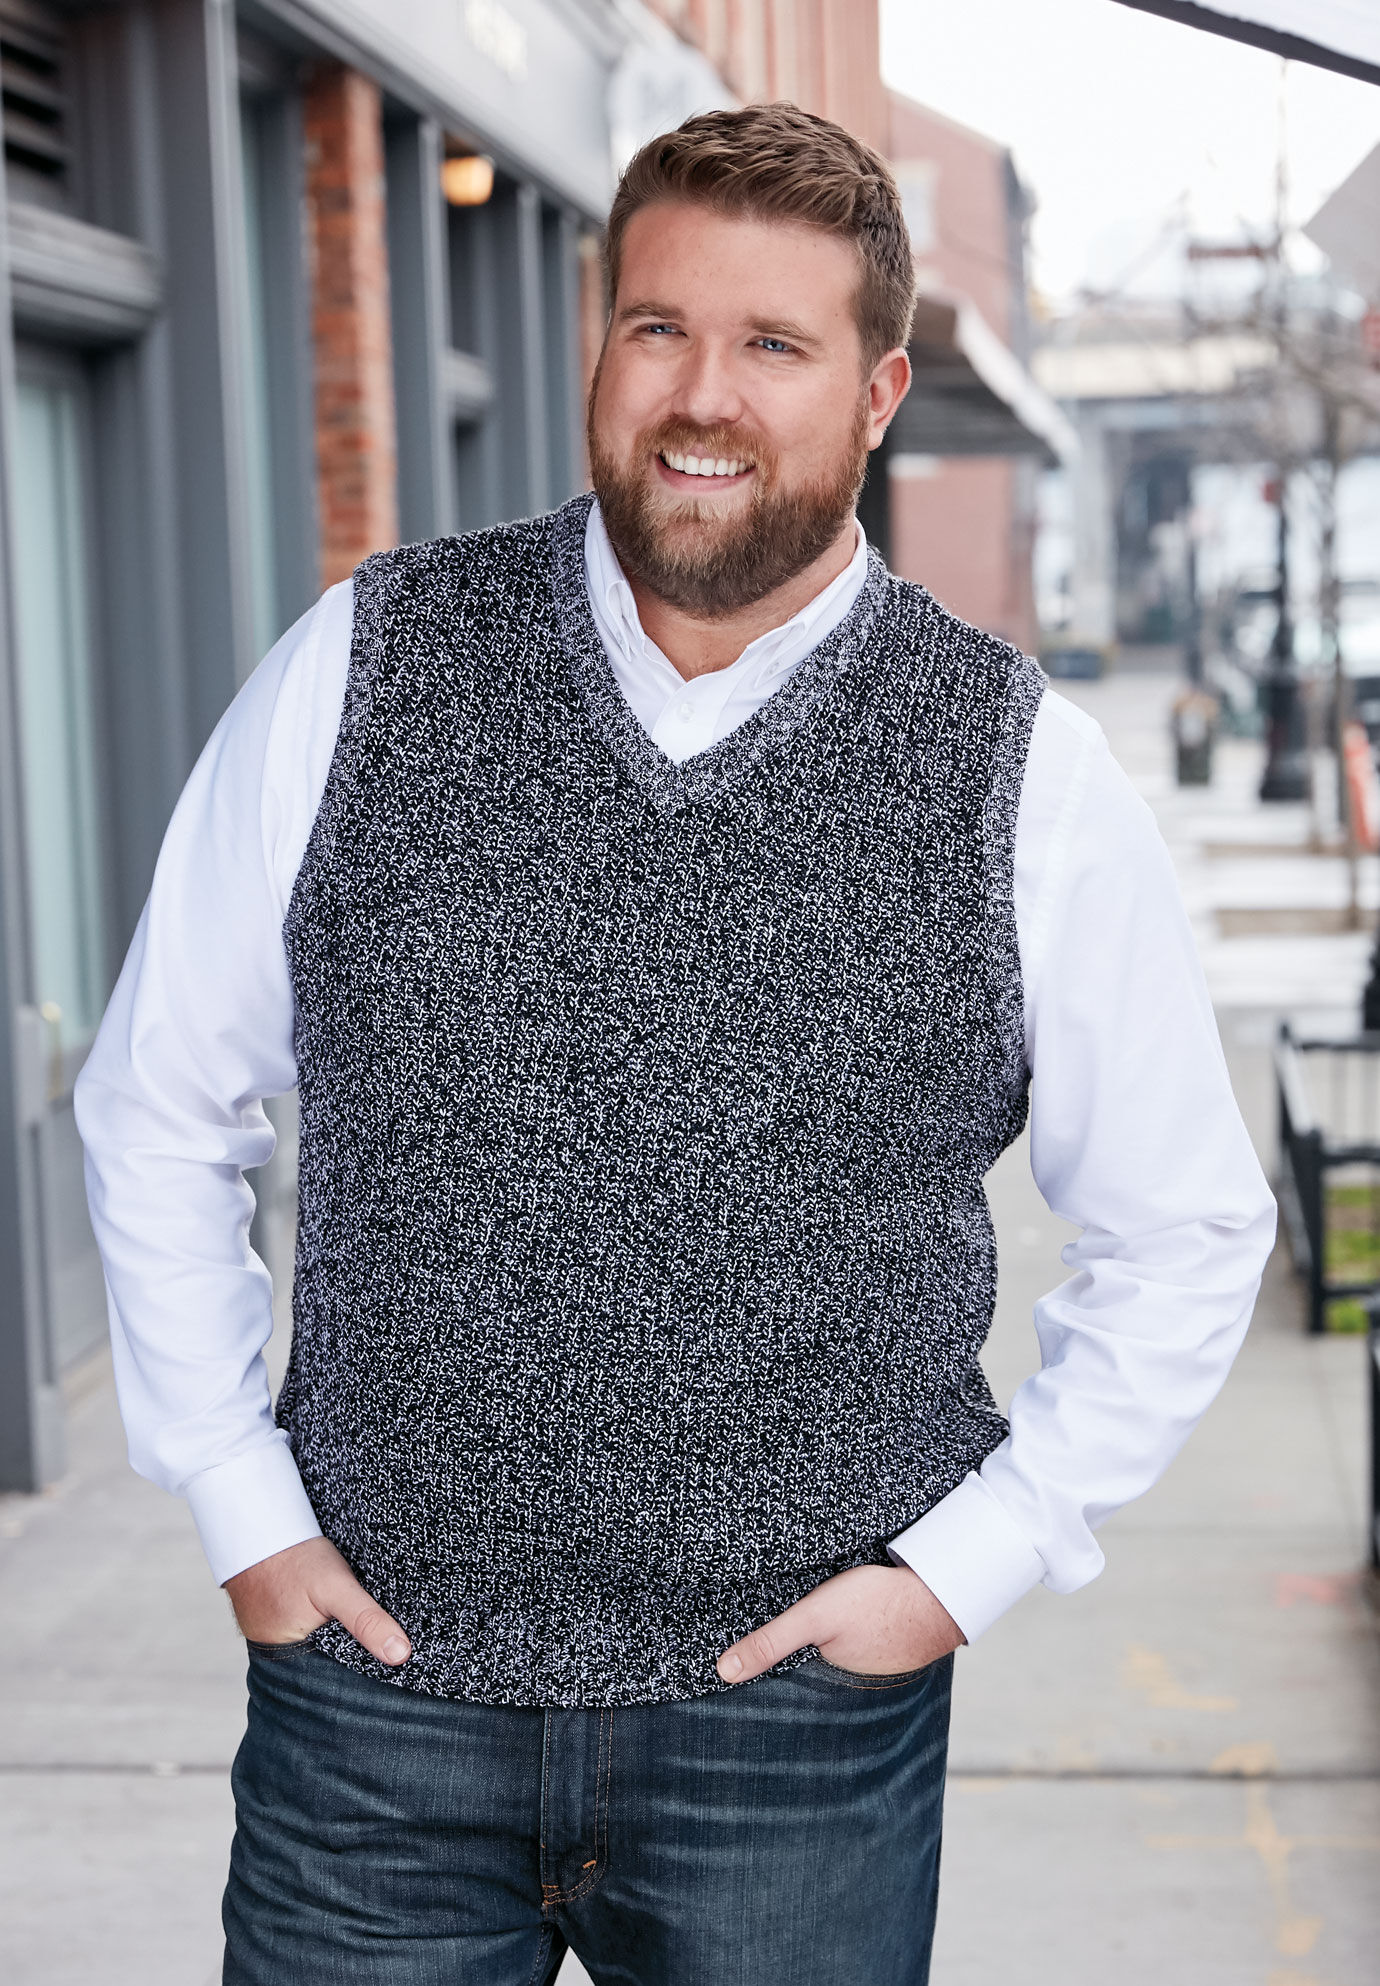 KingSize Men's Big & Tall Shaker Knit V-Neck Sweater Vest